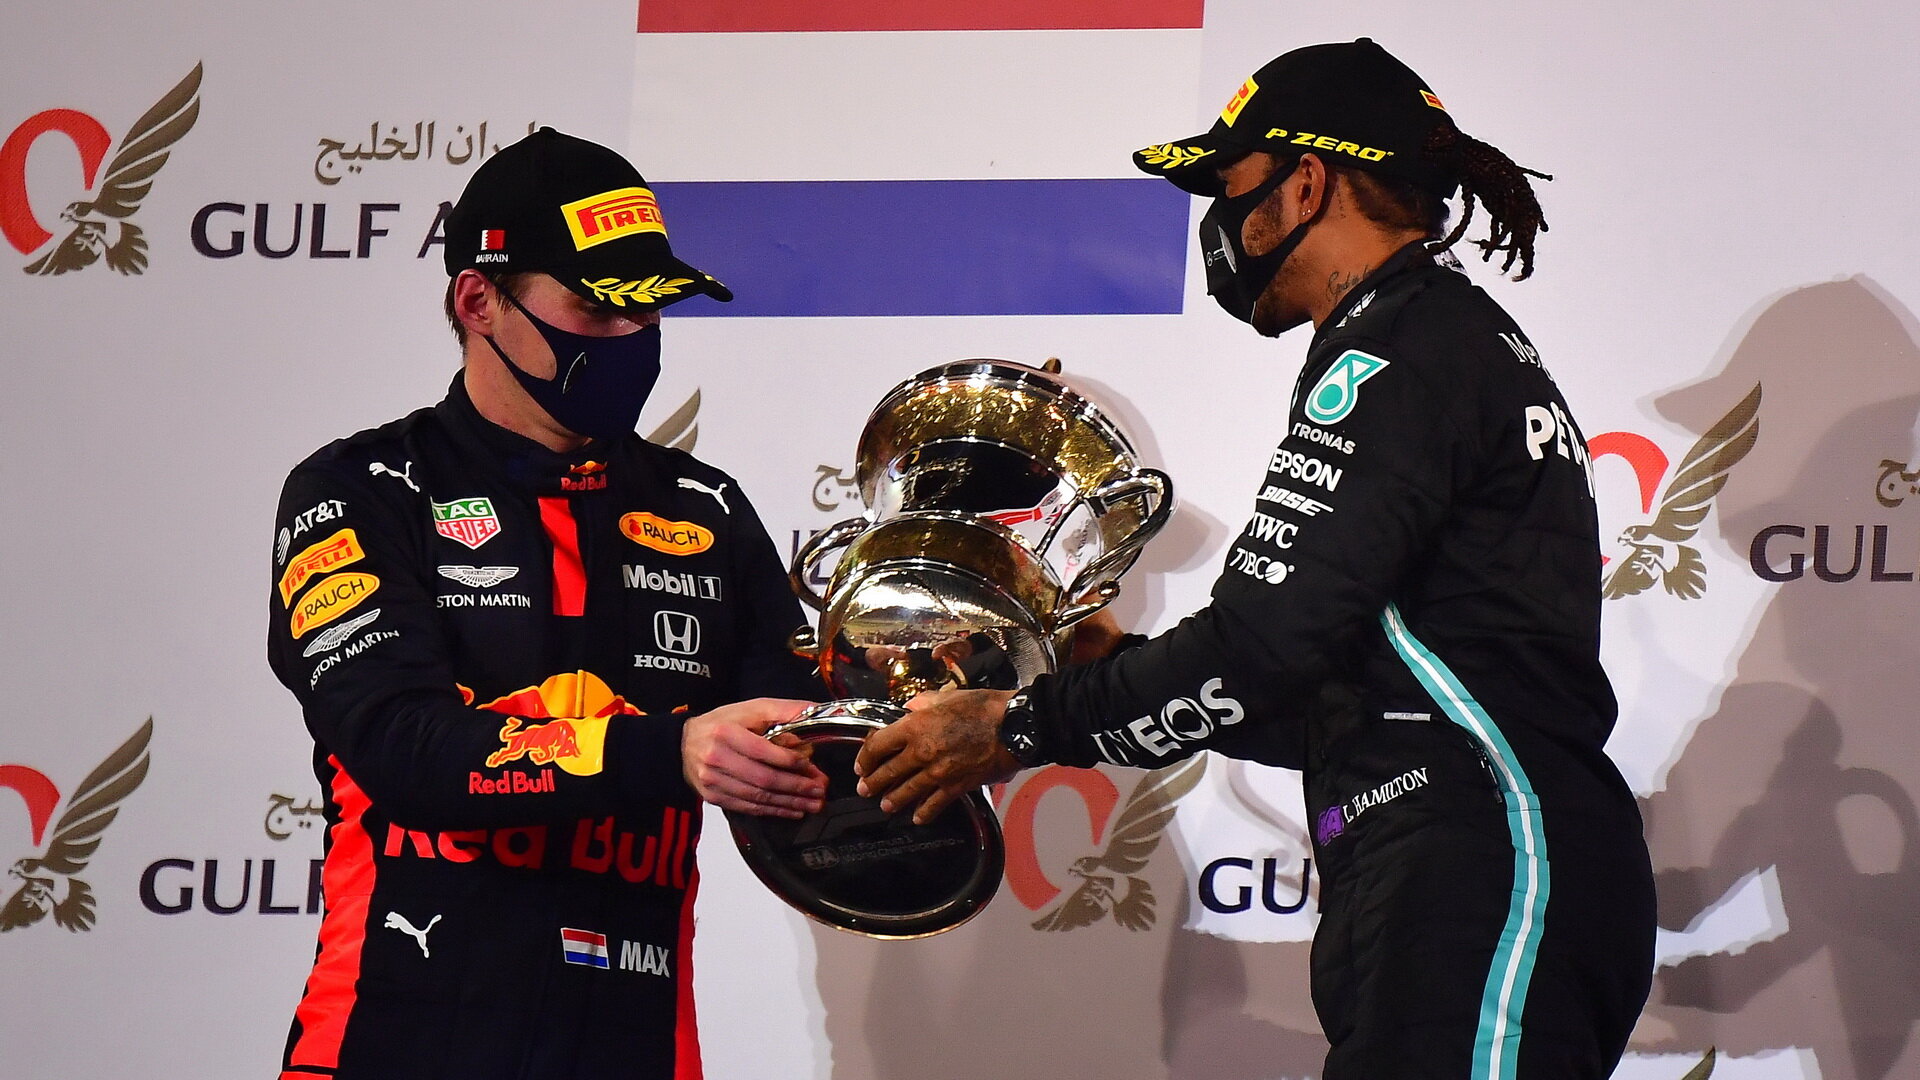 Lewis Hamlton dává potěžkat svou trofej Maxovi Verstappenovi na pódiu v Bahrajnu